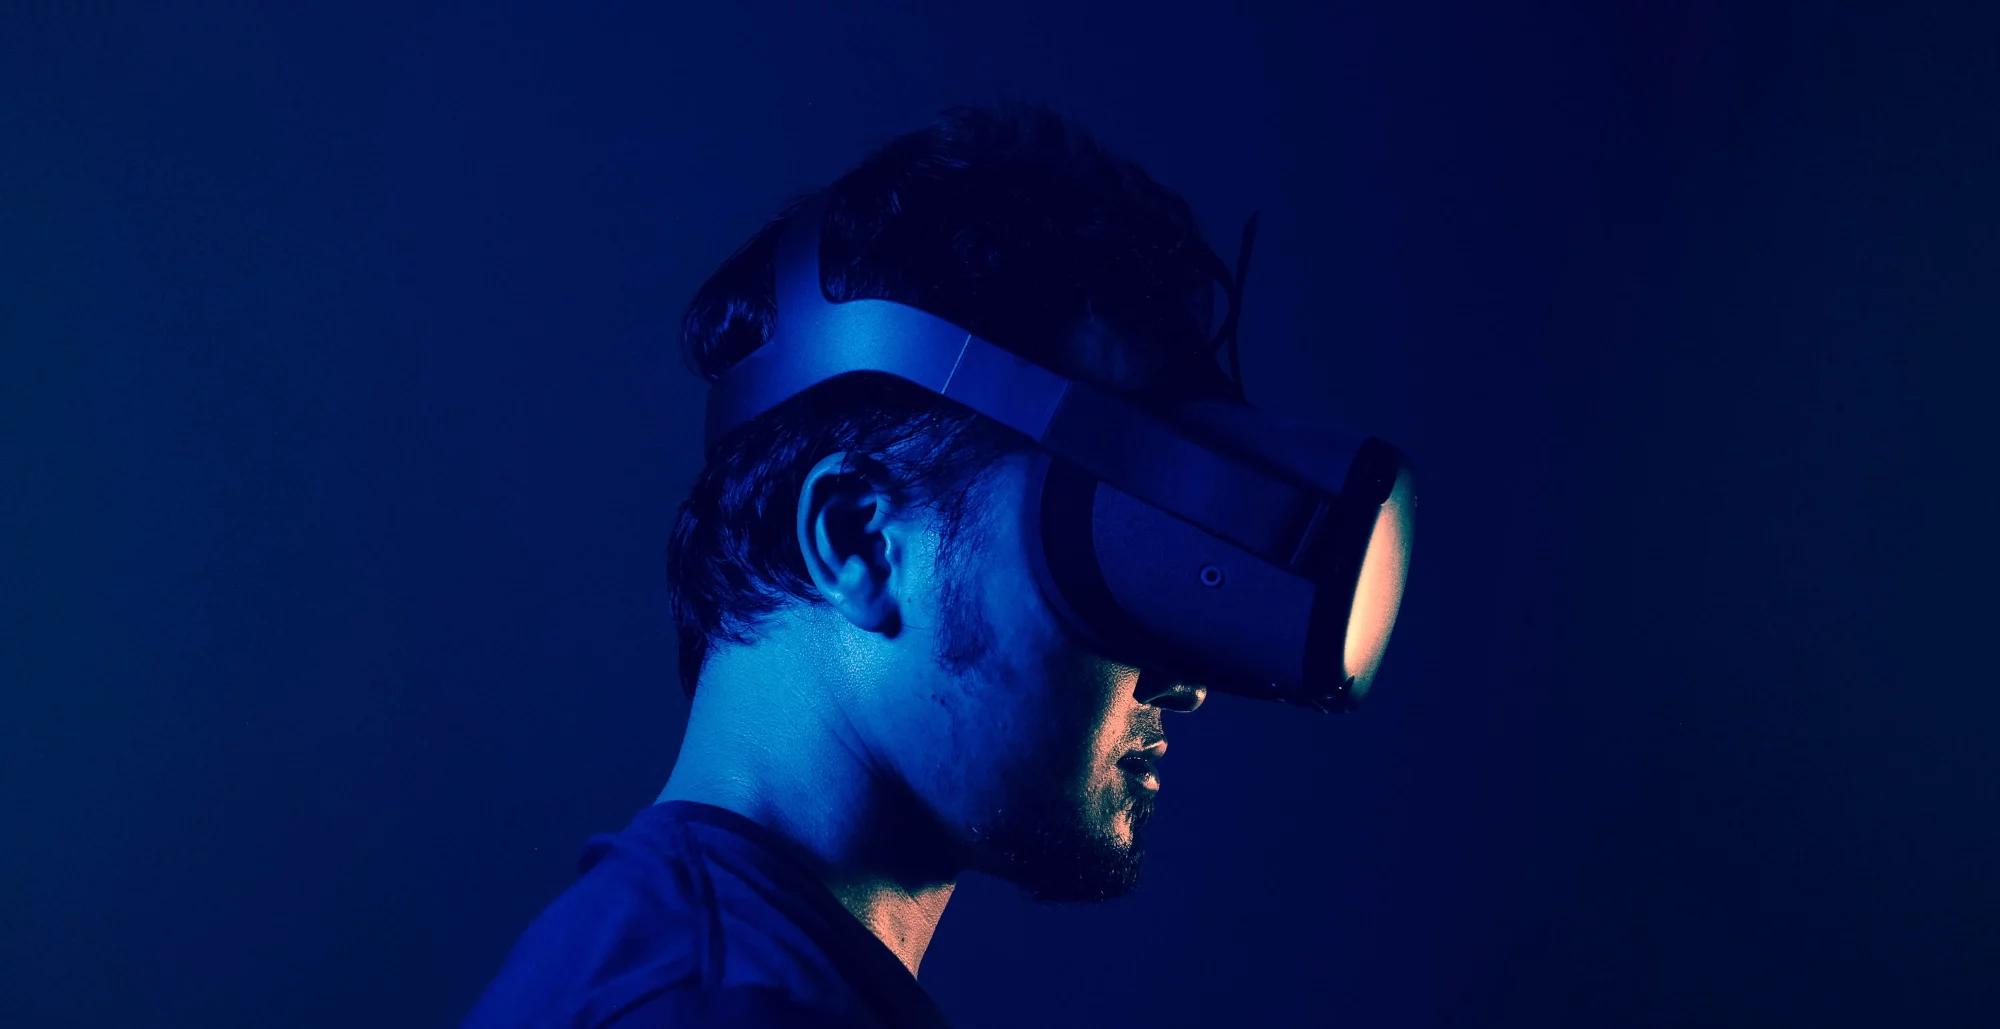 Male wearing VR headset in a blue light setting